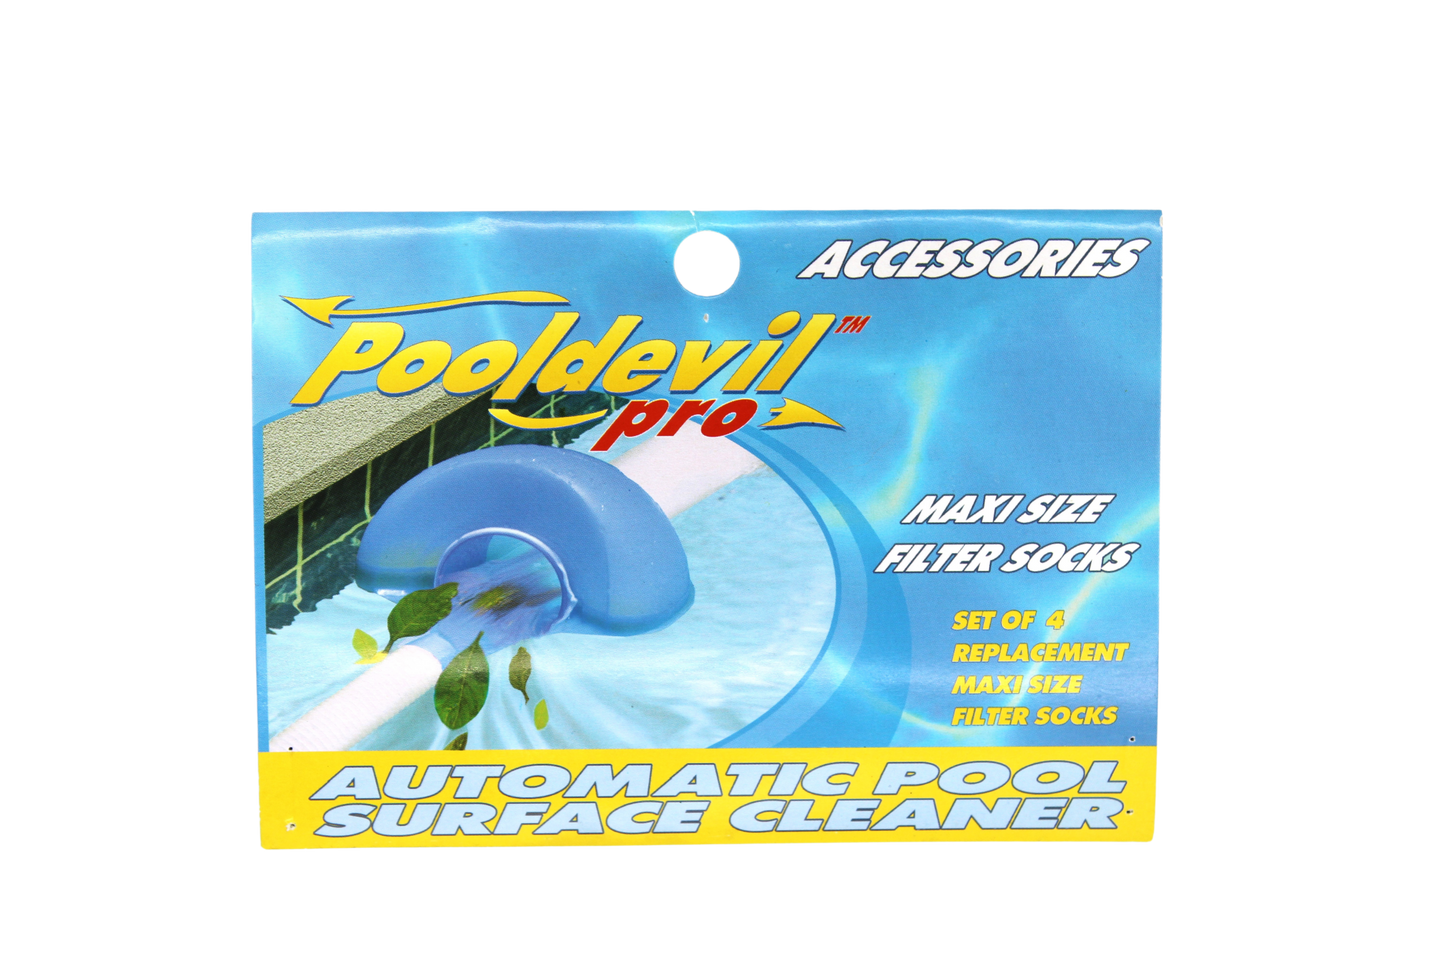 Pooldevil Pro Maxi filter sock package